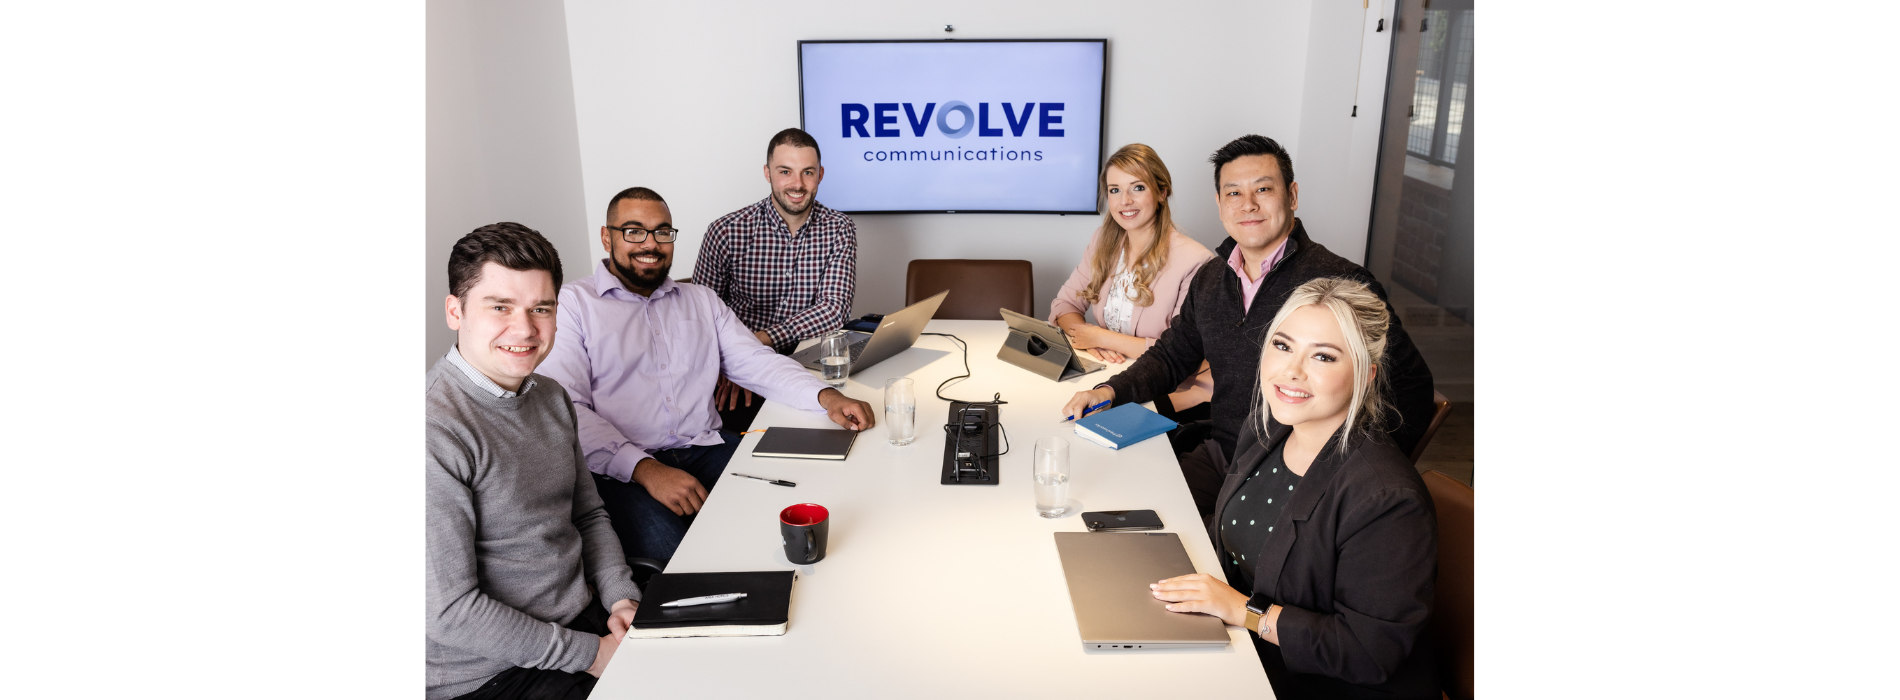 Revolve group pic in office banner v4